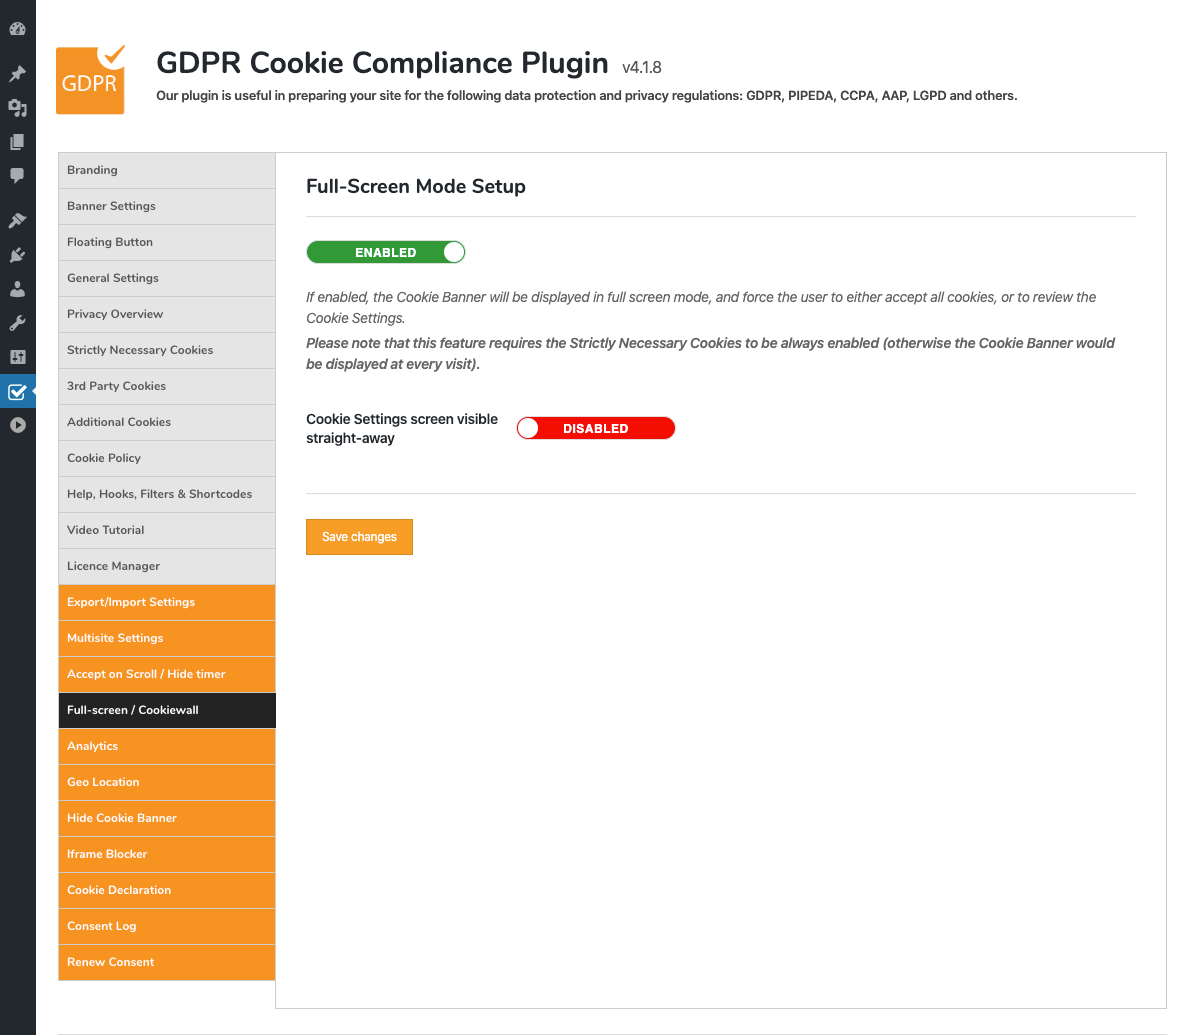 GDPR Cookie Compliance - Admin - Full-Screen / Cookiewall [Premium]